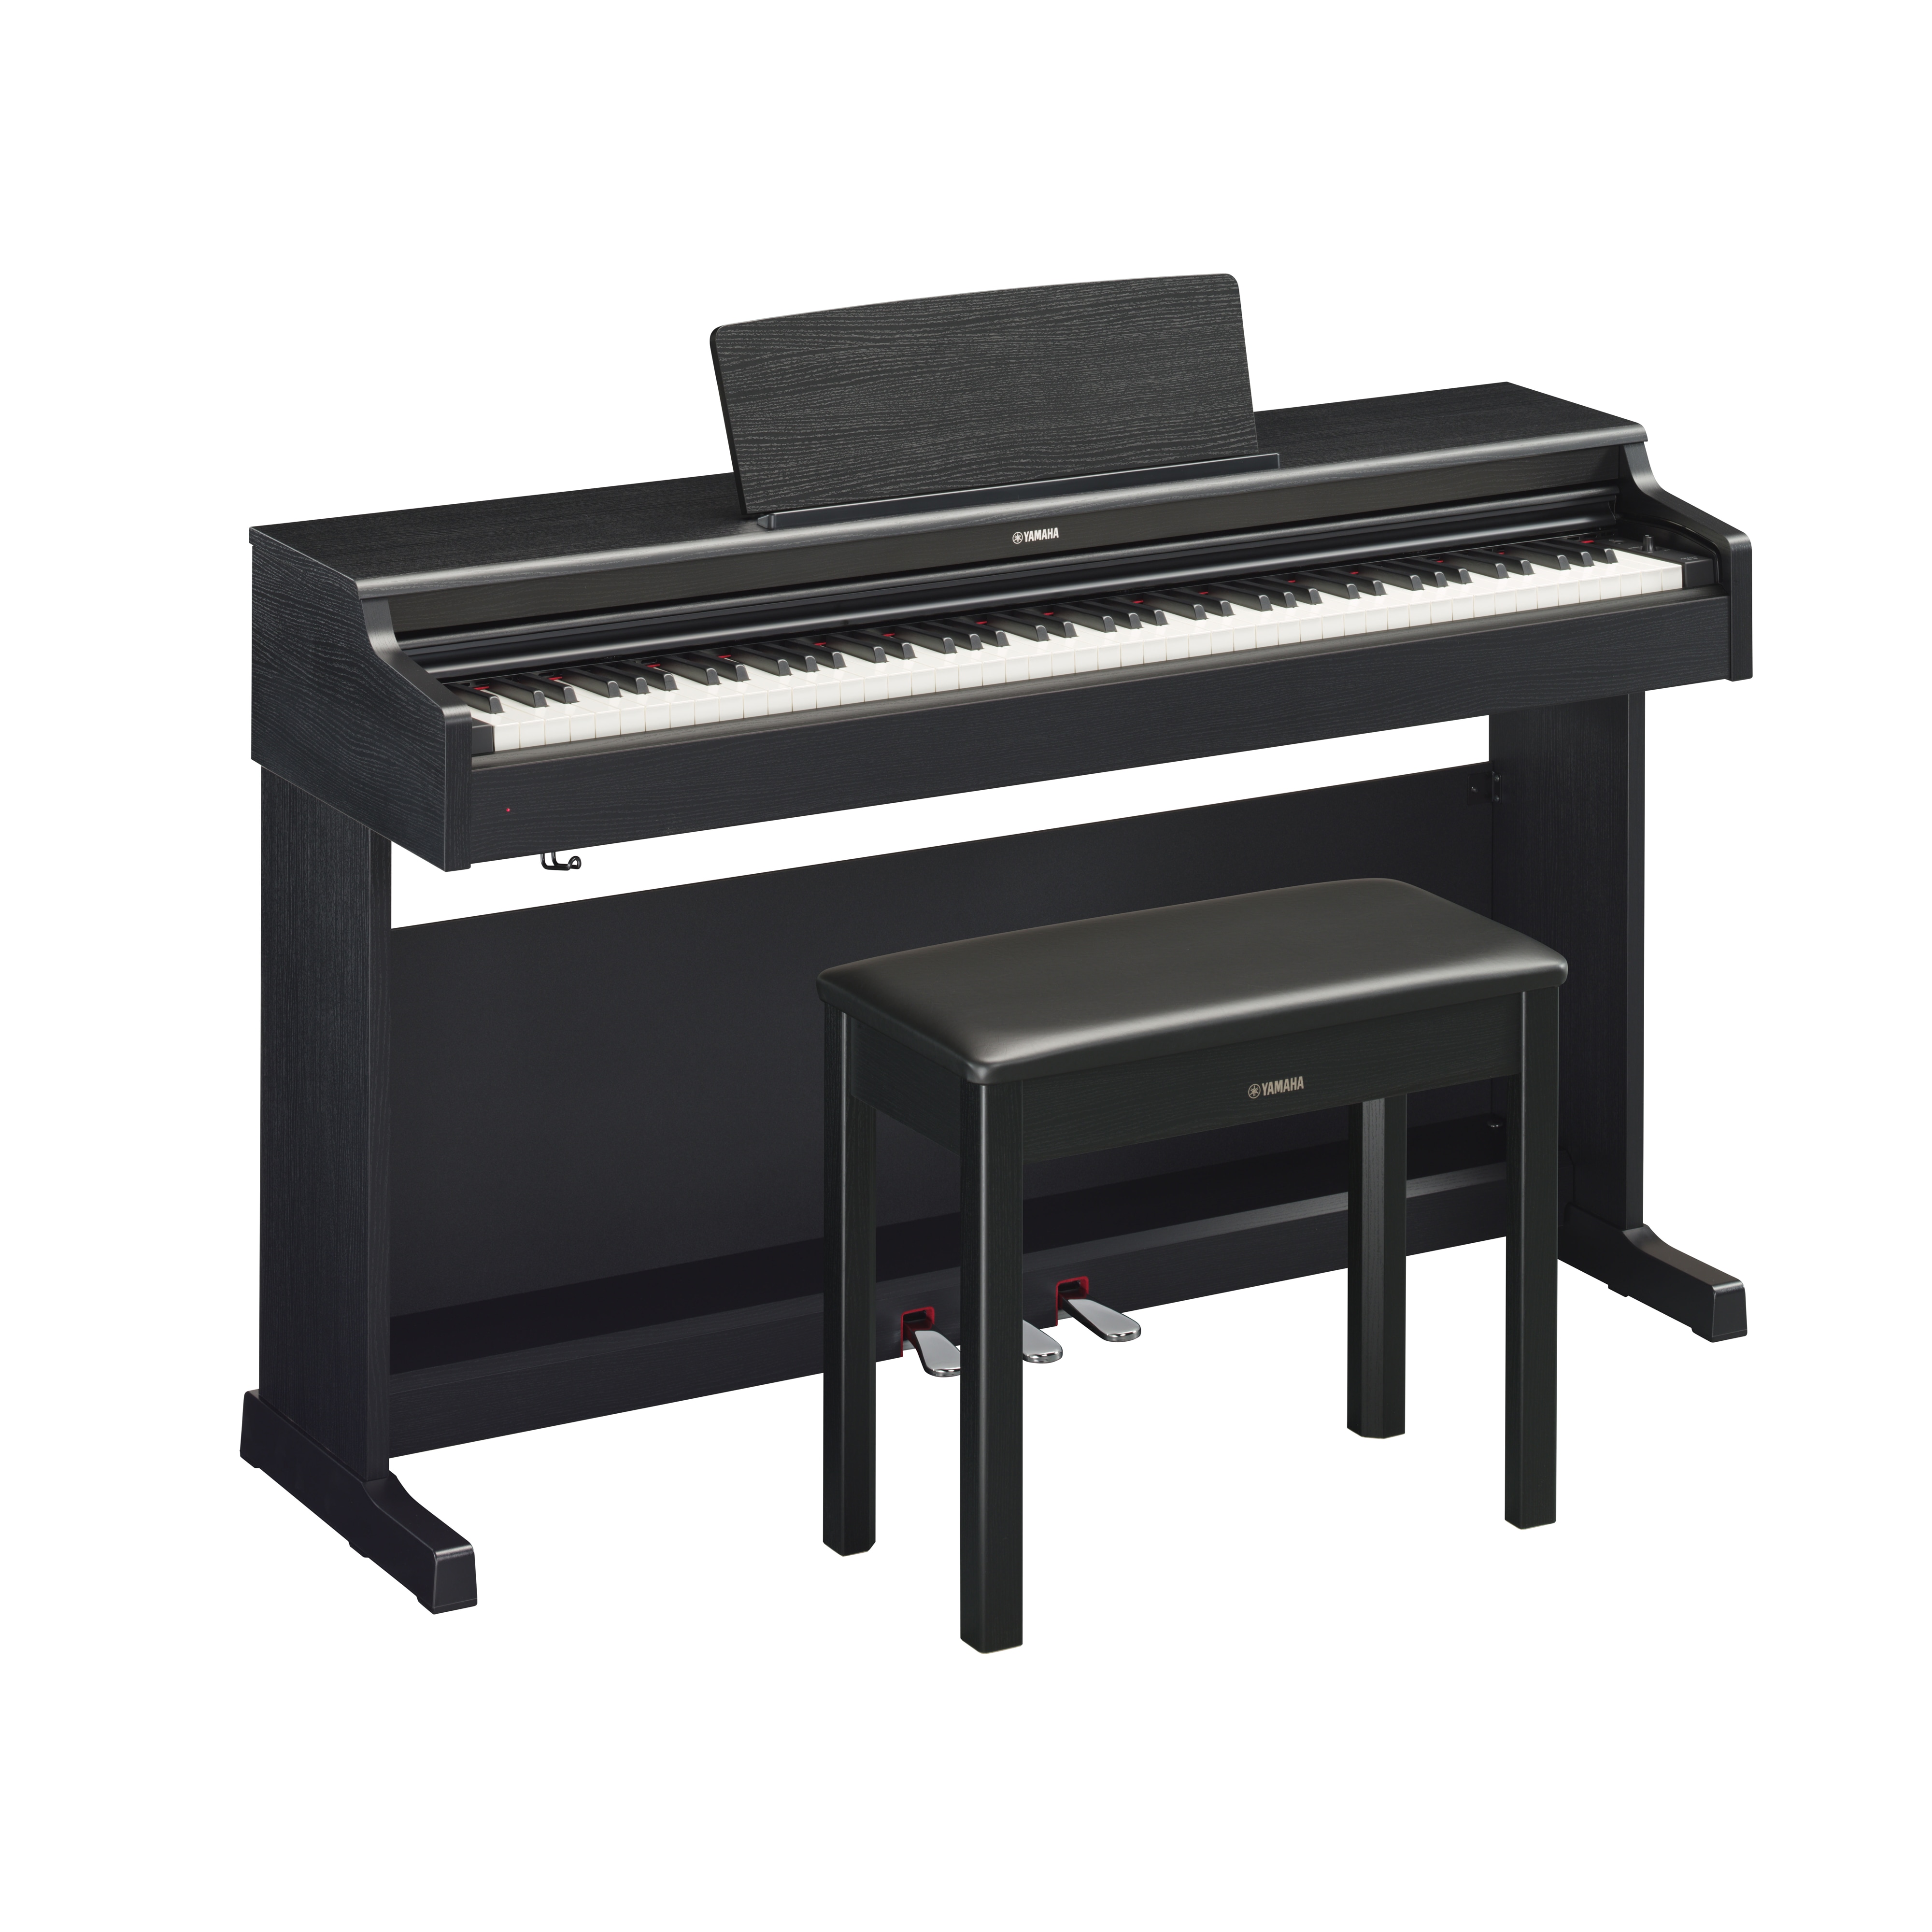 YDP-164 - Smart Pianist - ARIUS - Pianos - Musical Instruments 